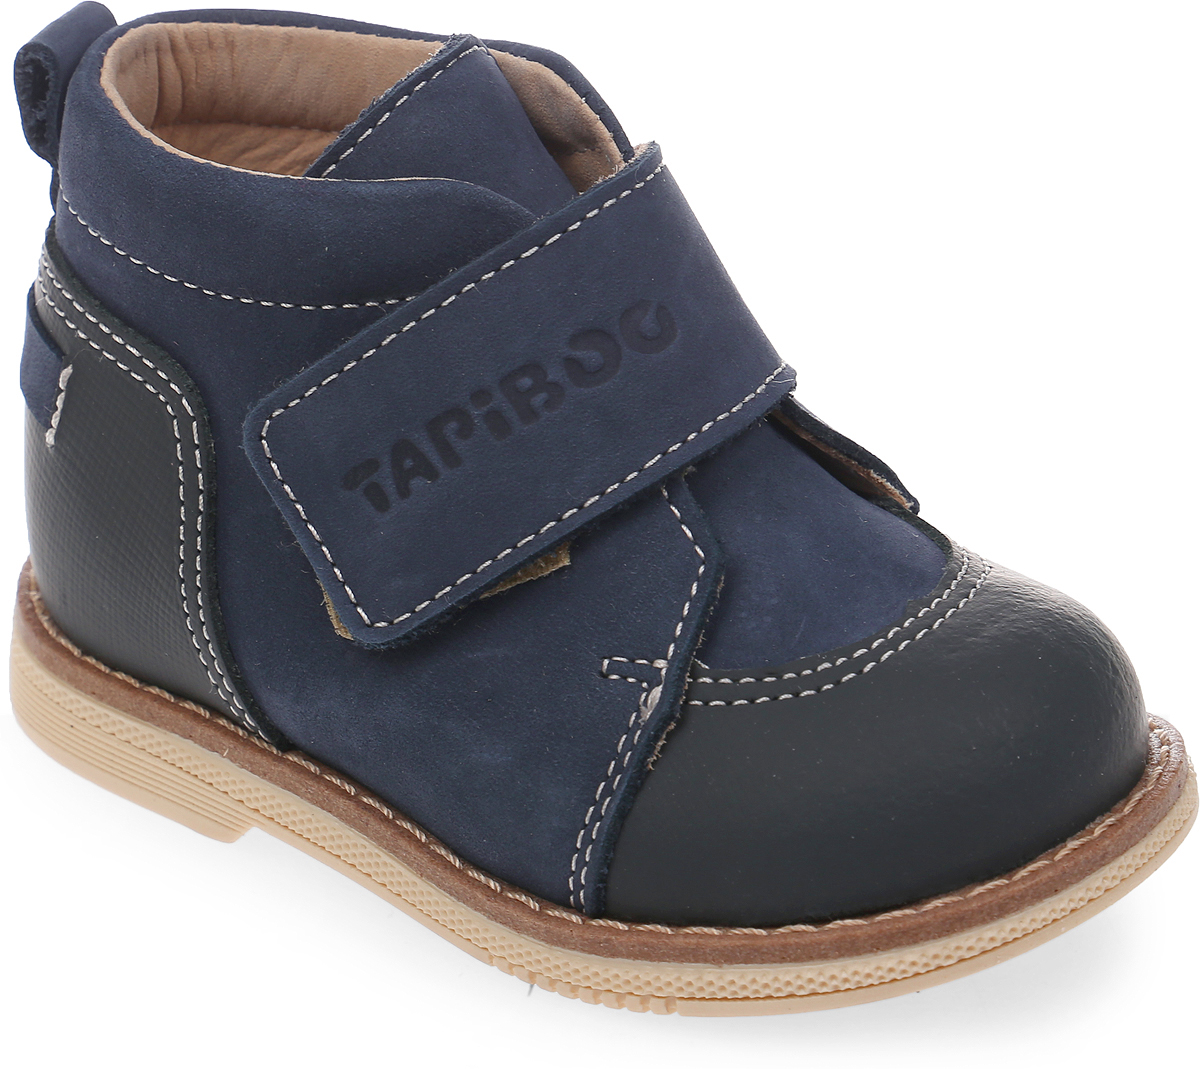 Ботинки для мальчика Tapiboo Ирис, цвет: синий. FT-24015.18-OL08O.01. Размер 22